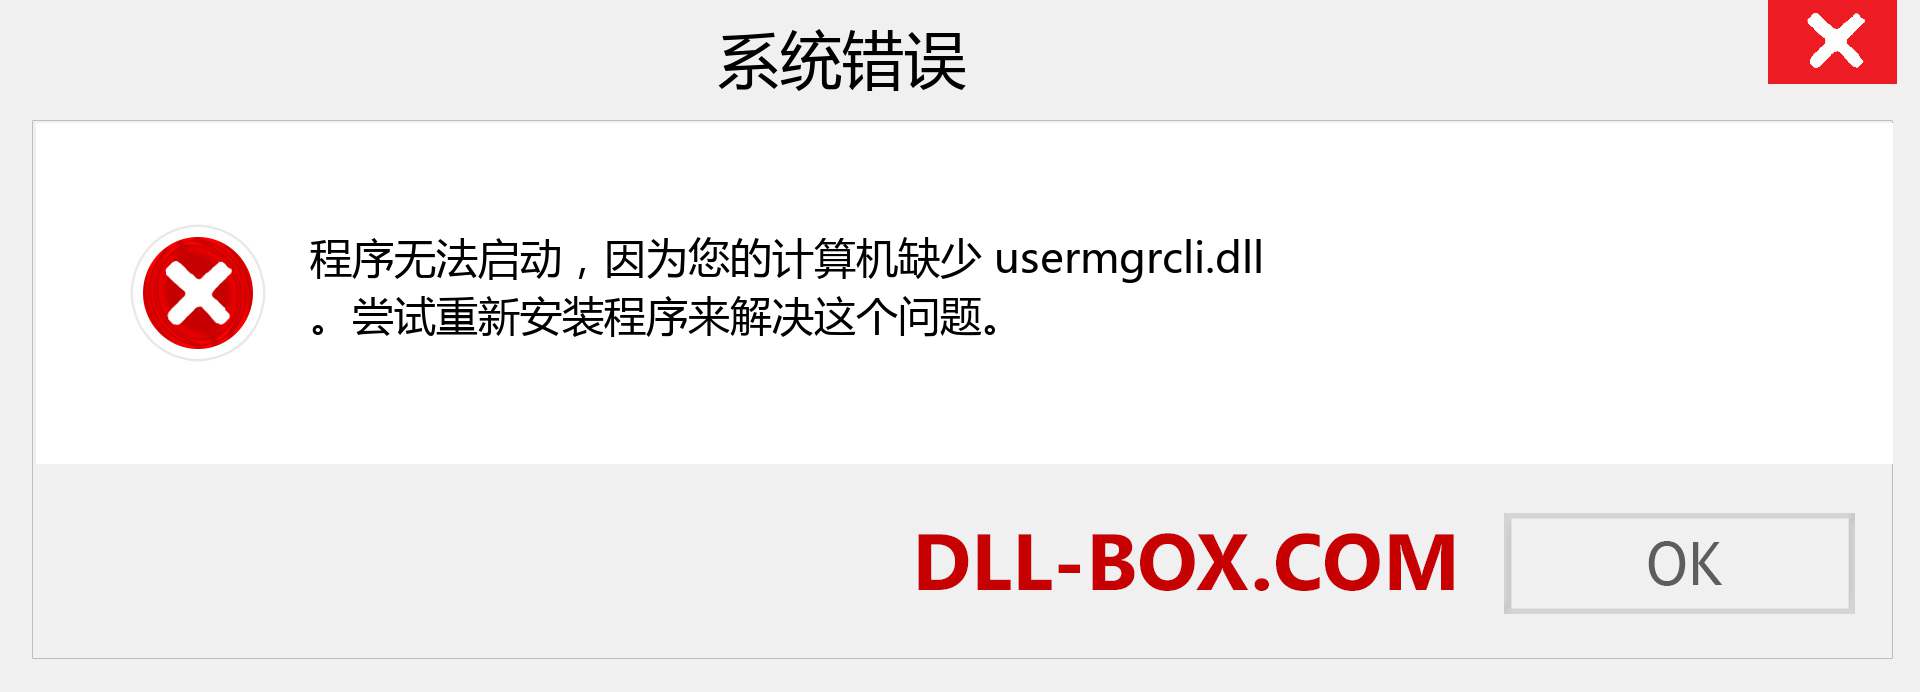 usermgrcli.dll 文件丢失？。 适用于 Windows 7、8、10 的下载 - 修复 Windows、照片、图像上的 usermgrcli dll 丢失错误